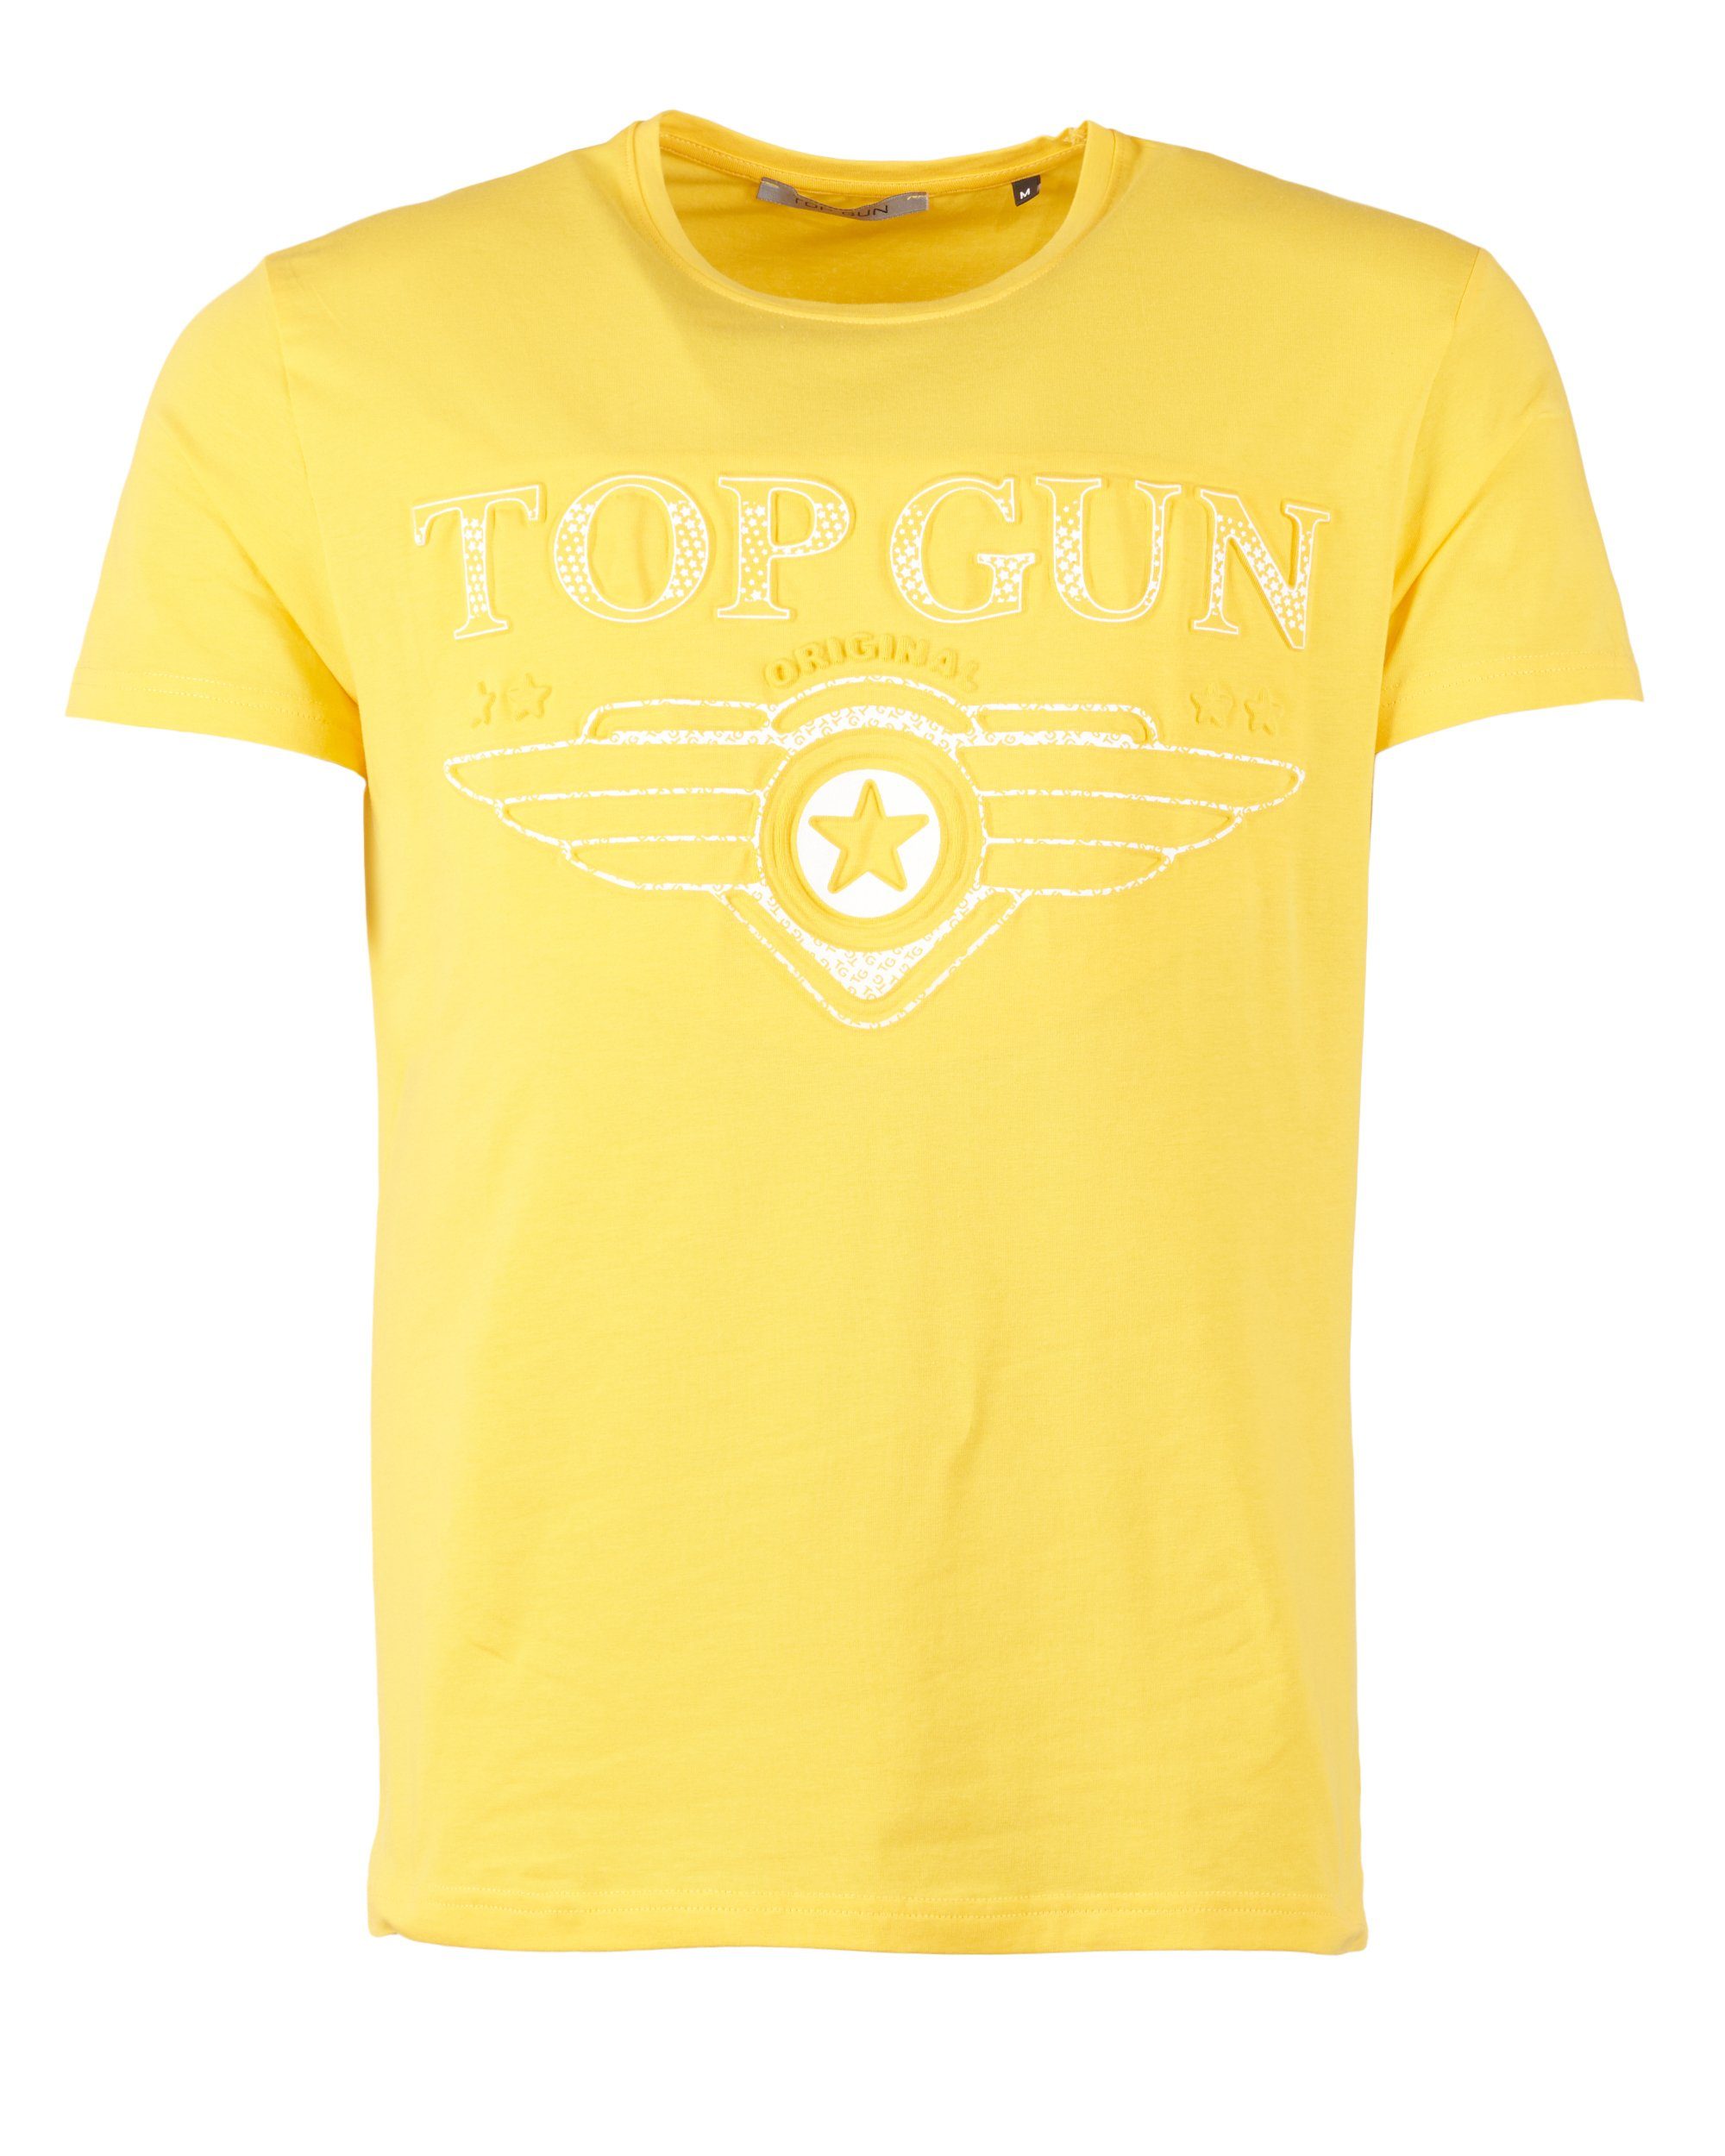 Bling T-Shirt TG20193018 yellow TOP GUN